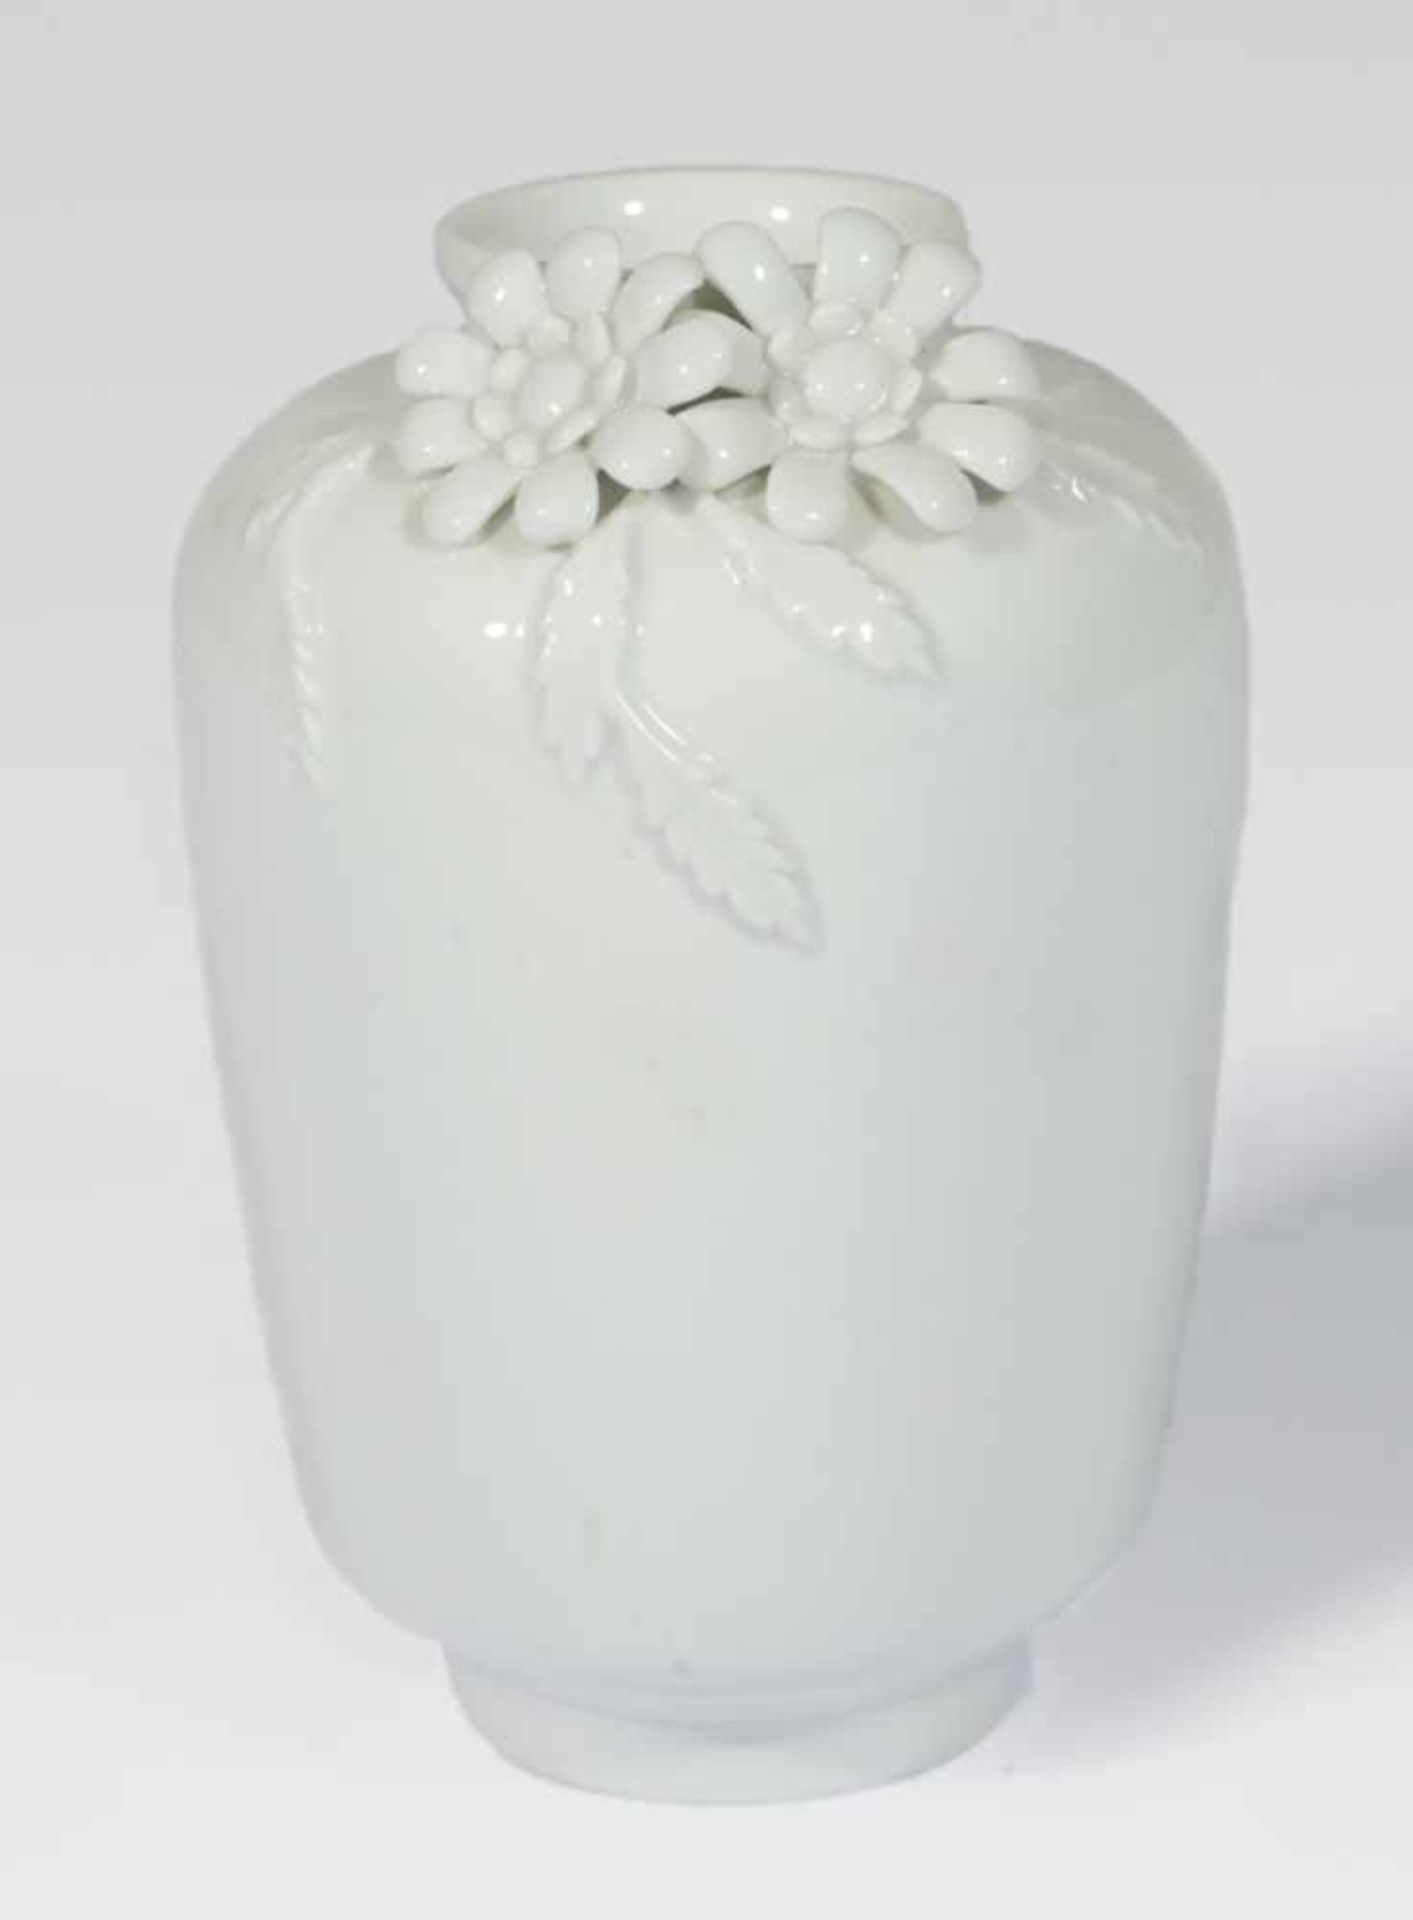 White vase with floral decor, Porcelain, KPM Berlin, 2nd half 20th c., 13 cm high,